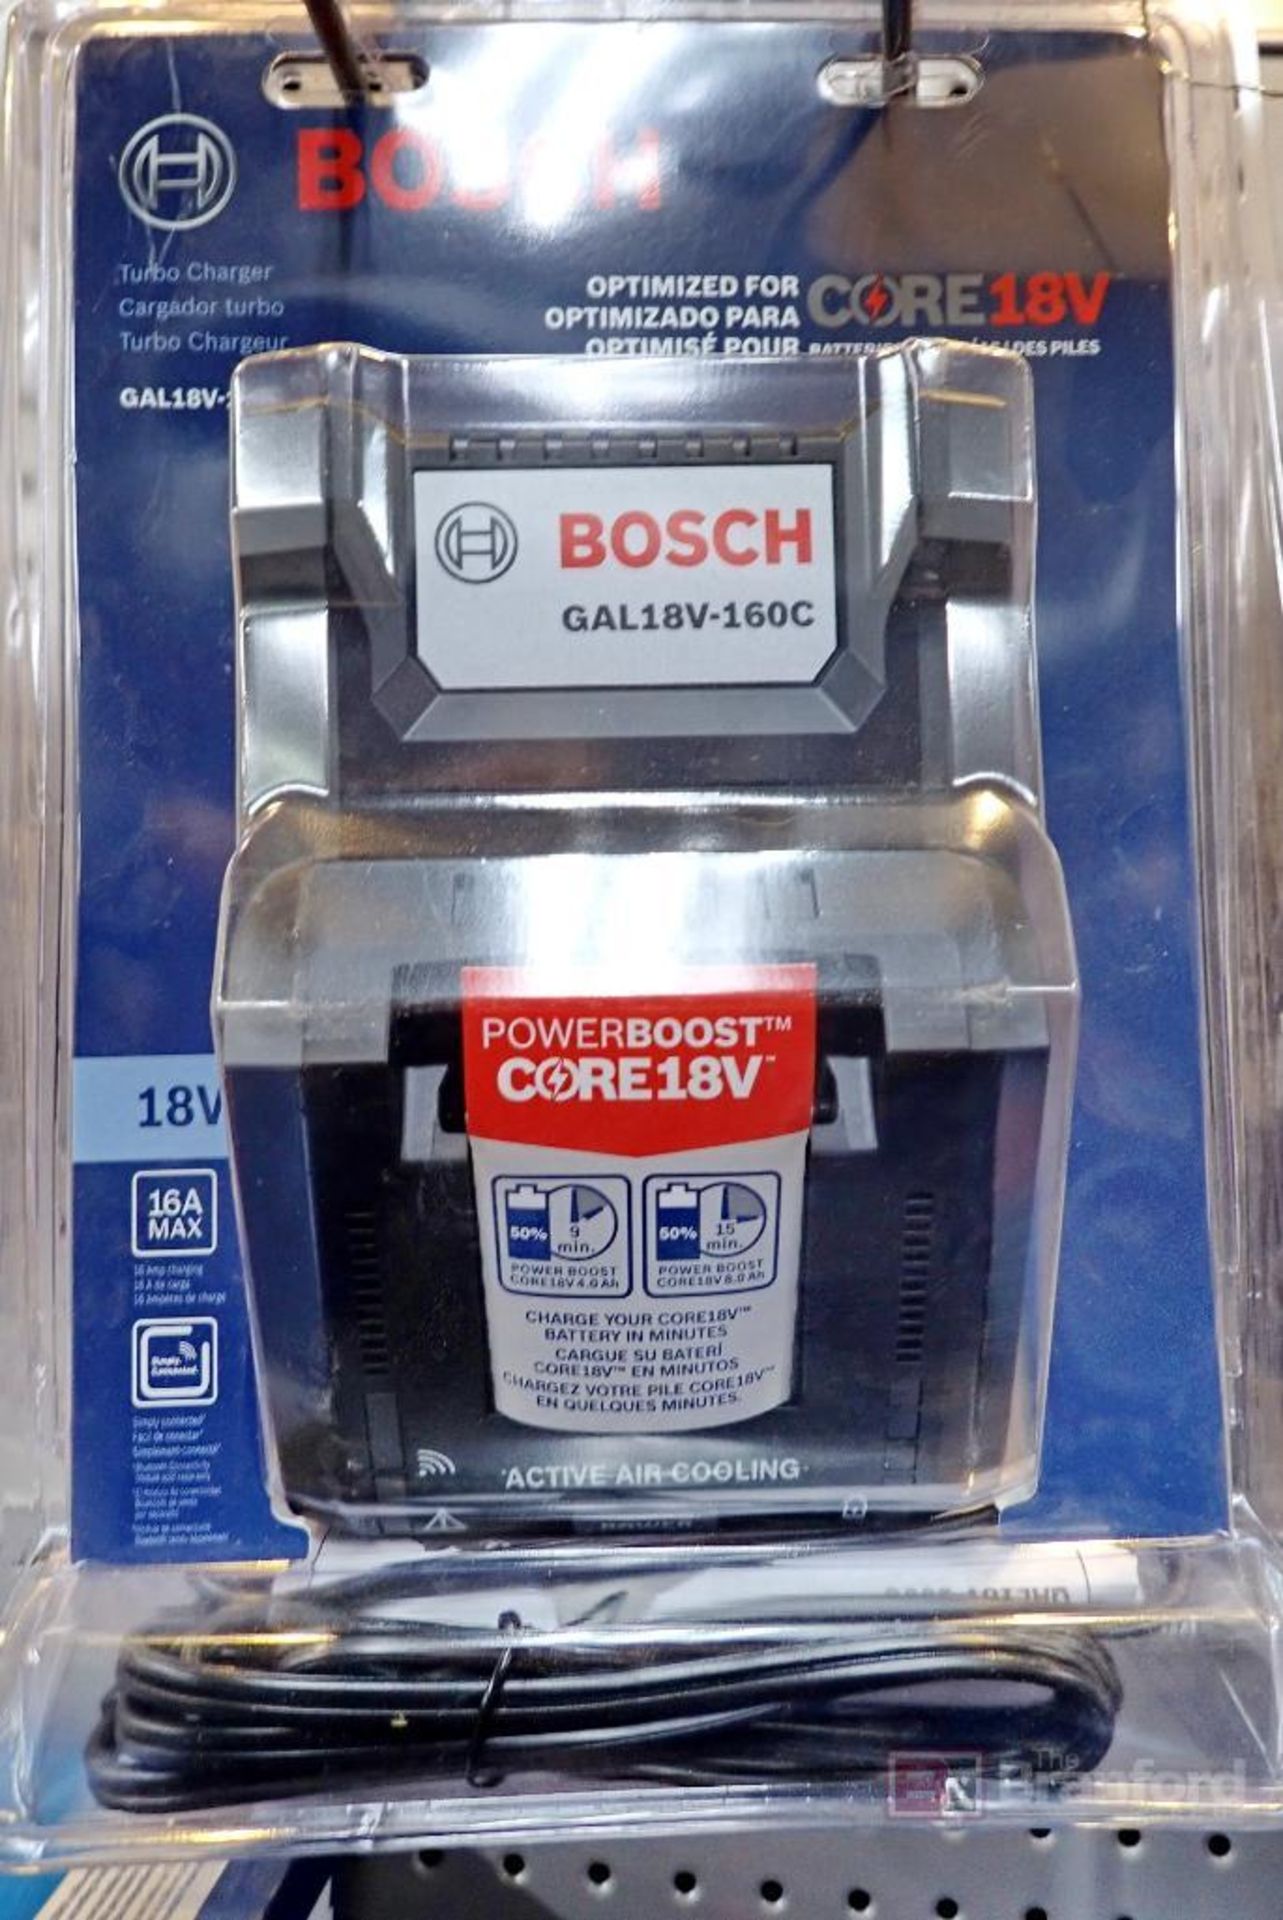 (2) Bosch GAL18V-160C Core 18V Turbo Chargers - Bild 2 aus 4